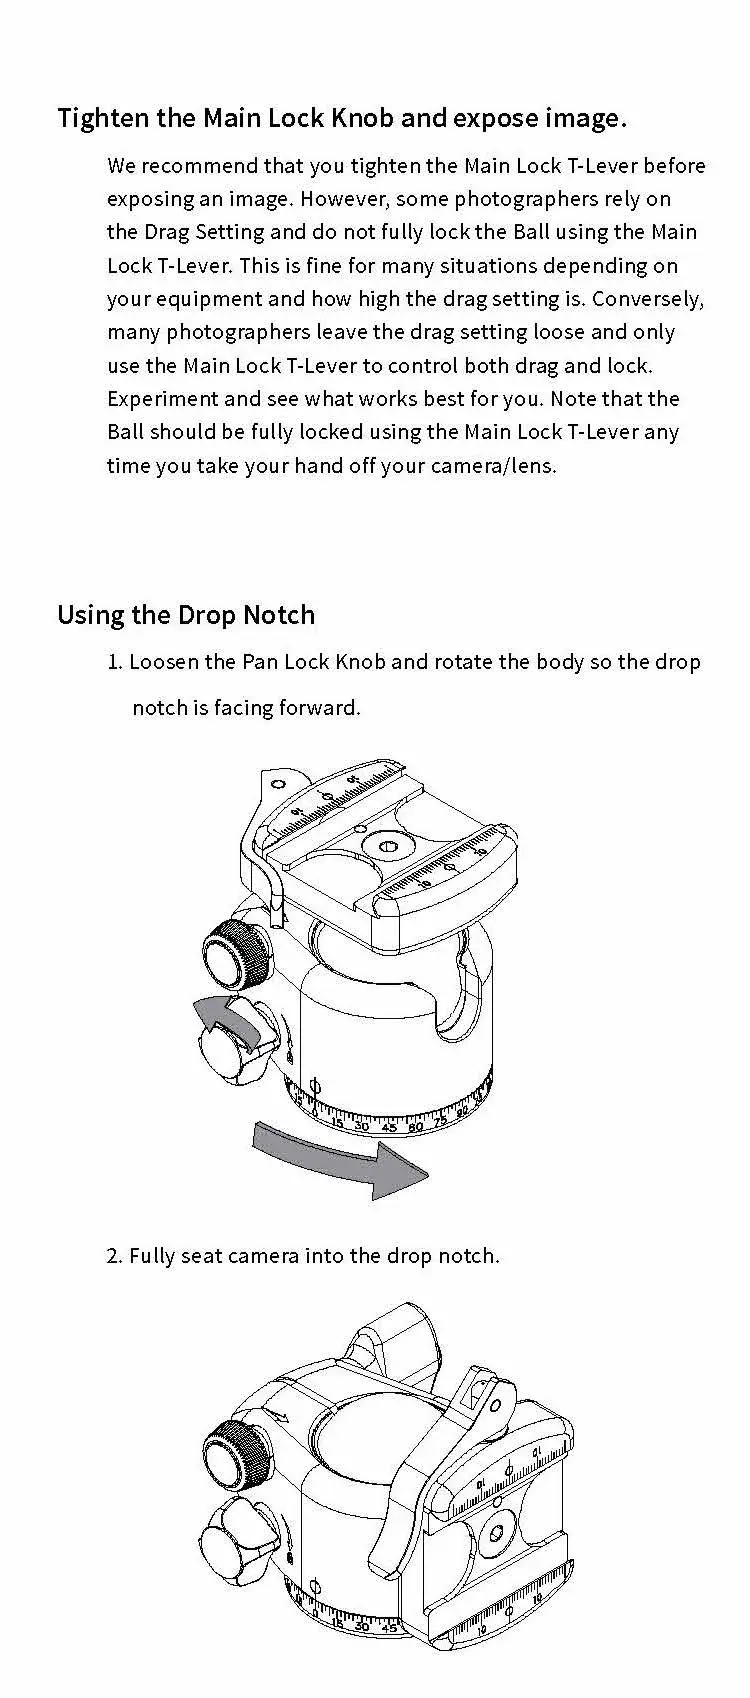 using the drop notch